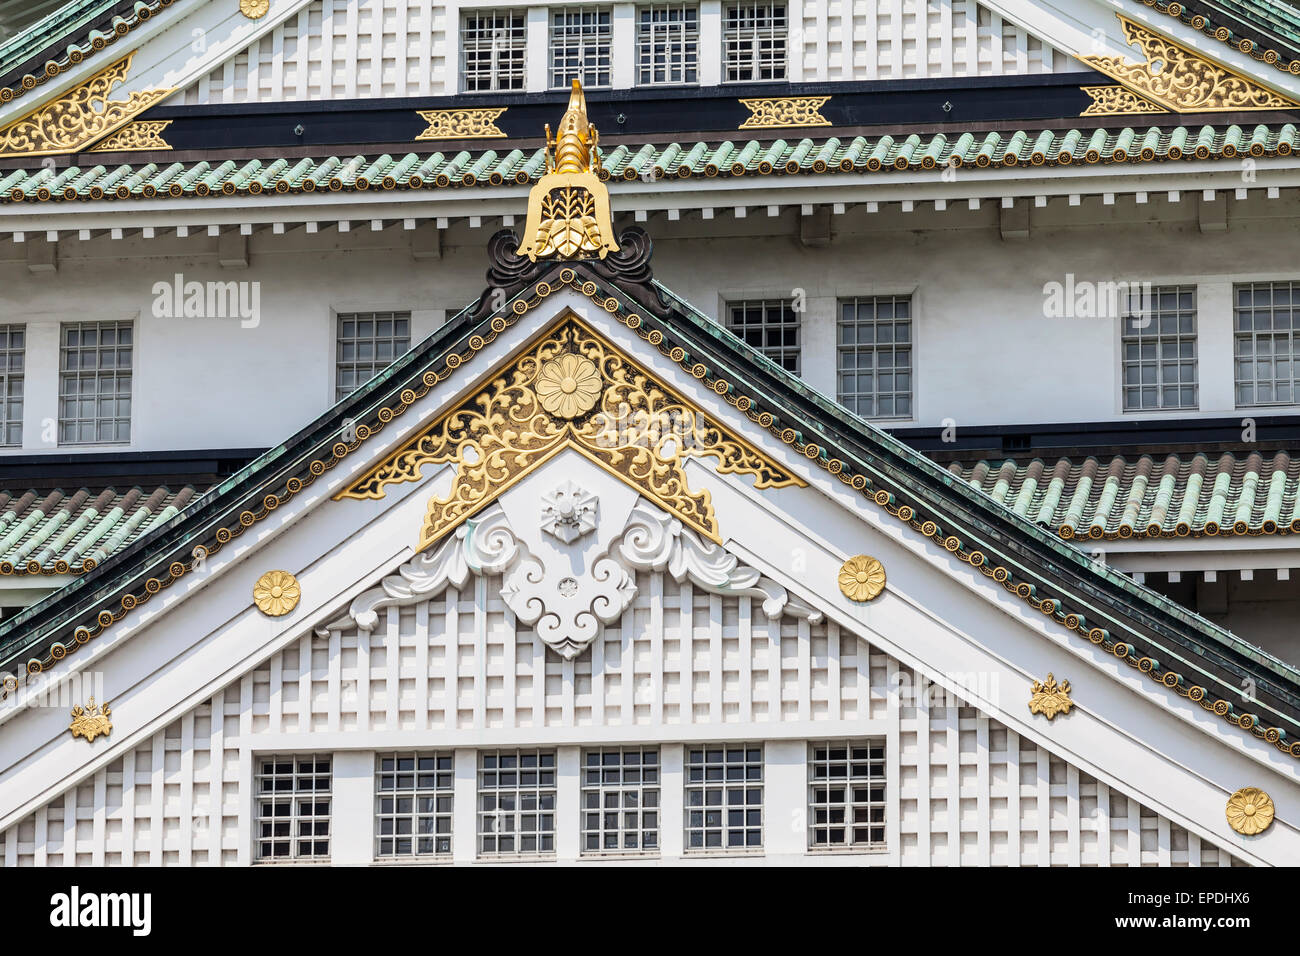 Osaka Castle Metal Earth Premium Series